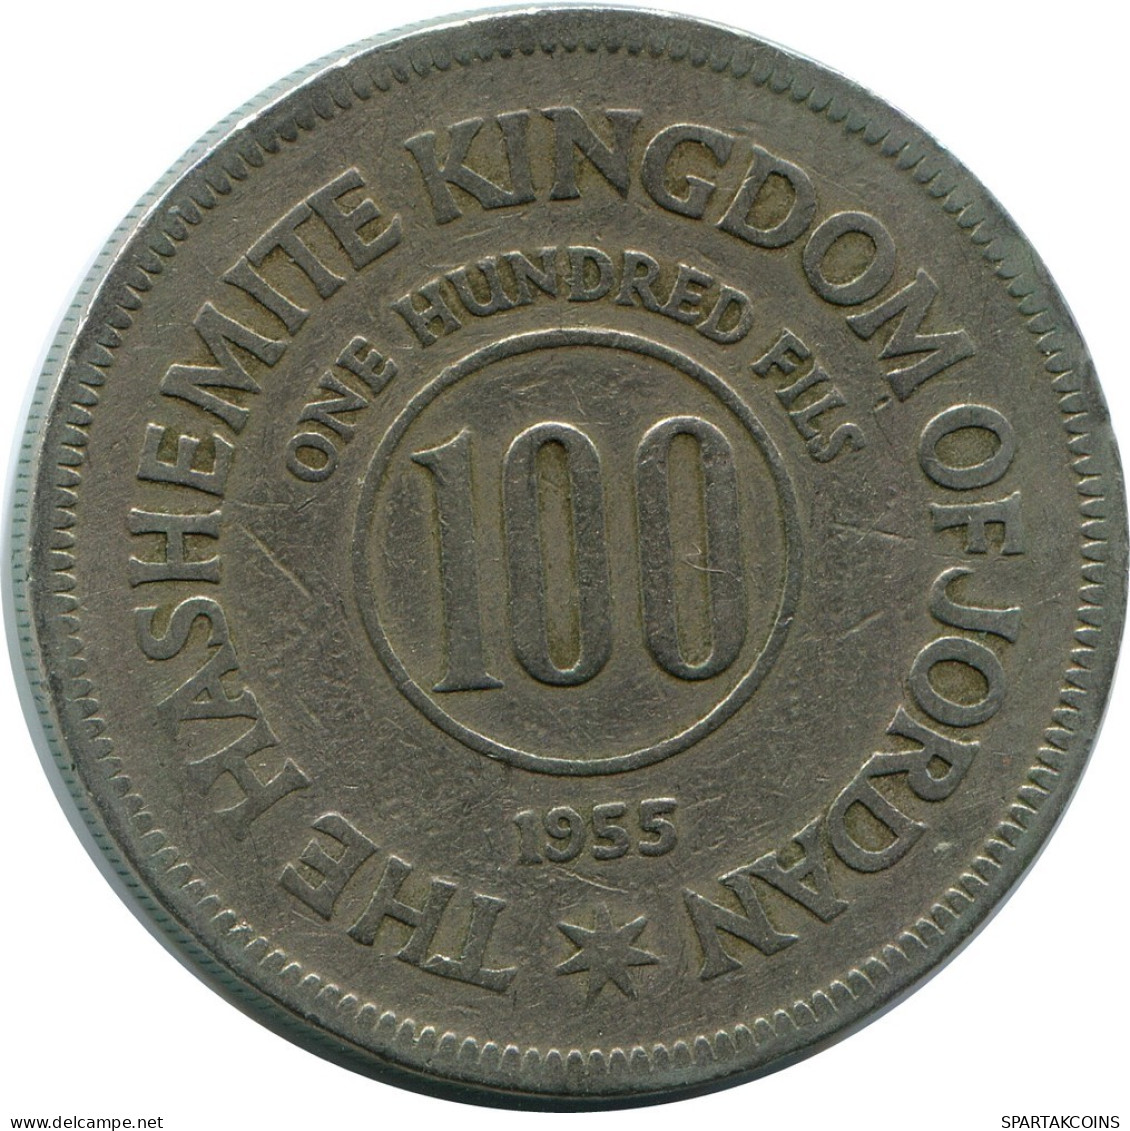 1 DIRHAM / 100 FILS 1955 JORDAN Coin #AP098.U.A - Jordan